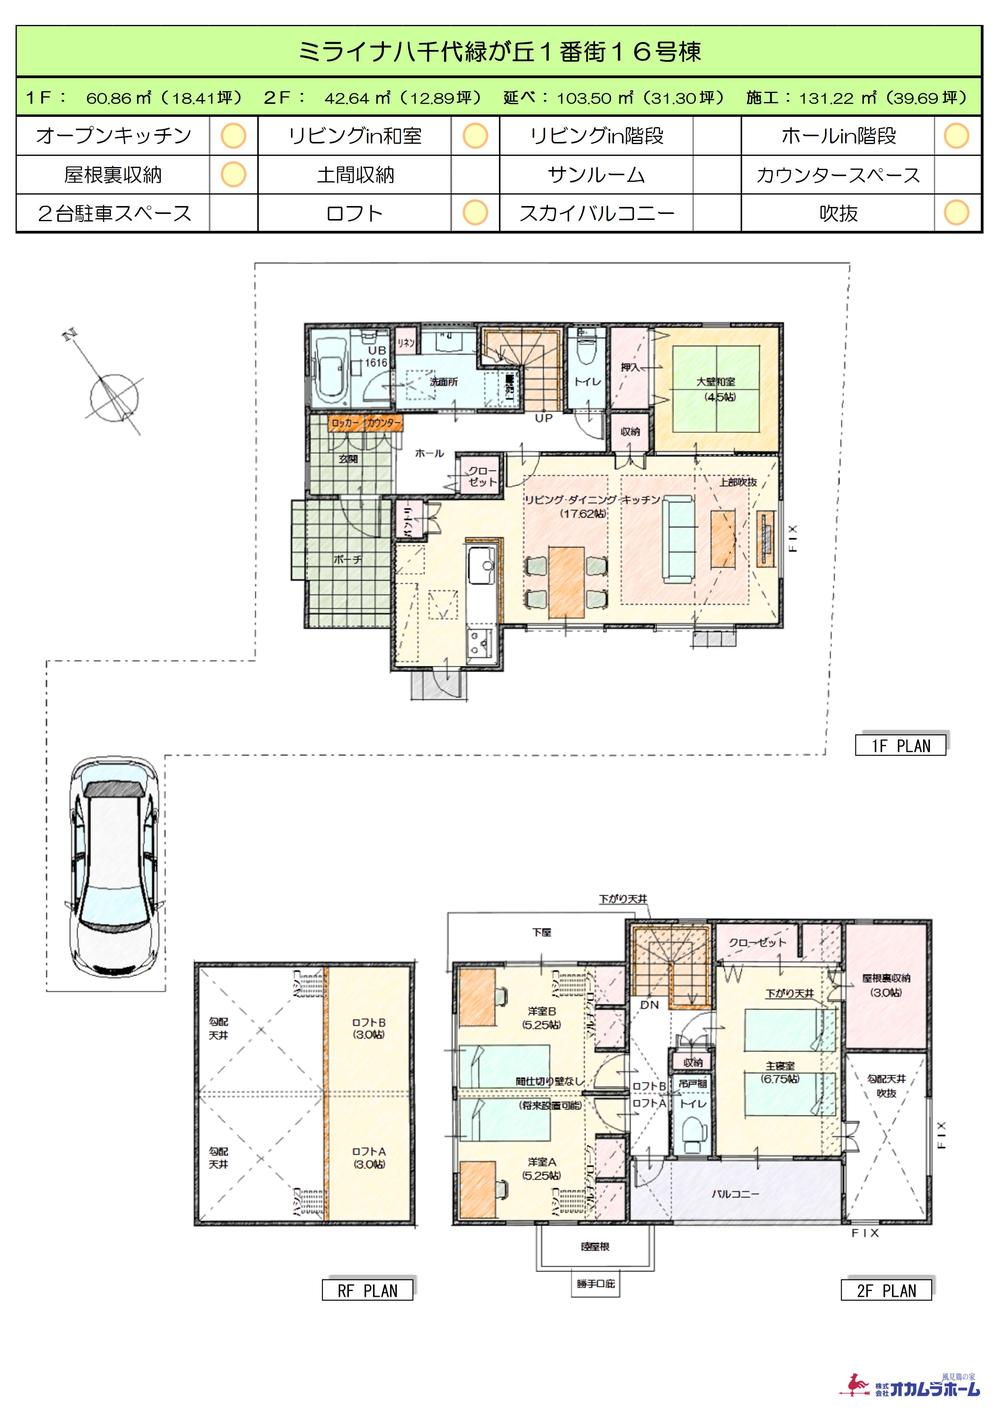 Floor plan. (16 Building), Price 29,800,000 yen, 3LDK, Land area 149.41 sq m , Building area 103.5 sq m